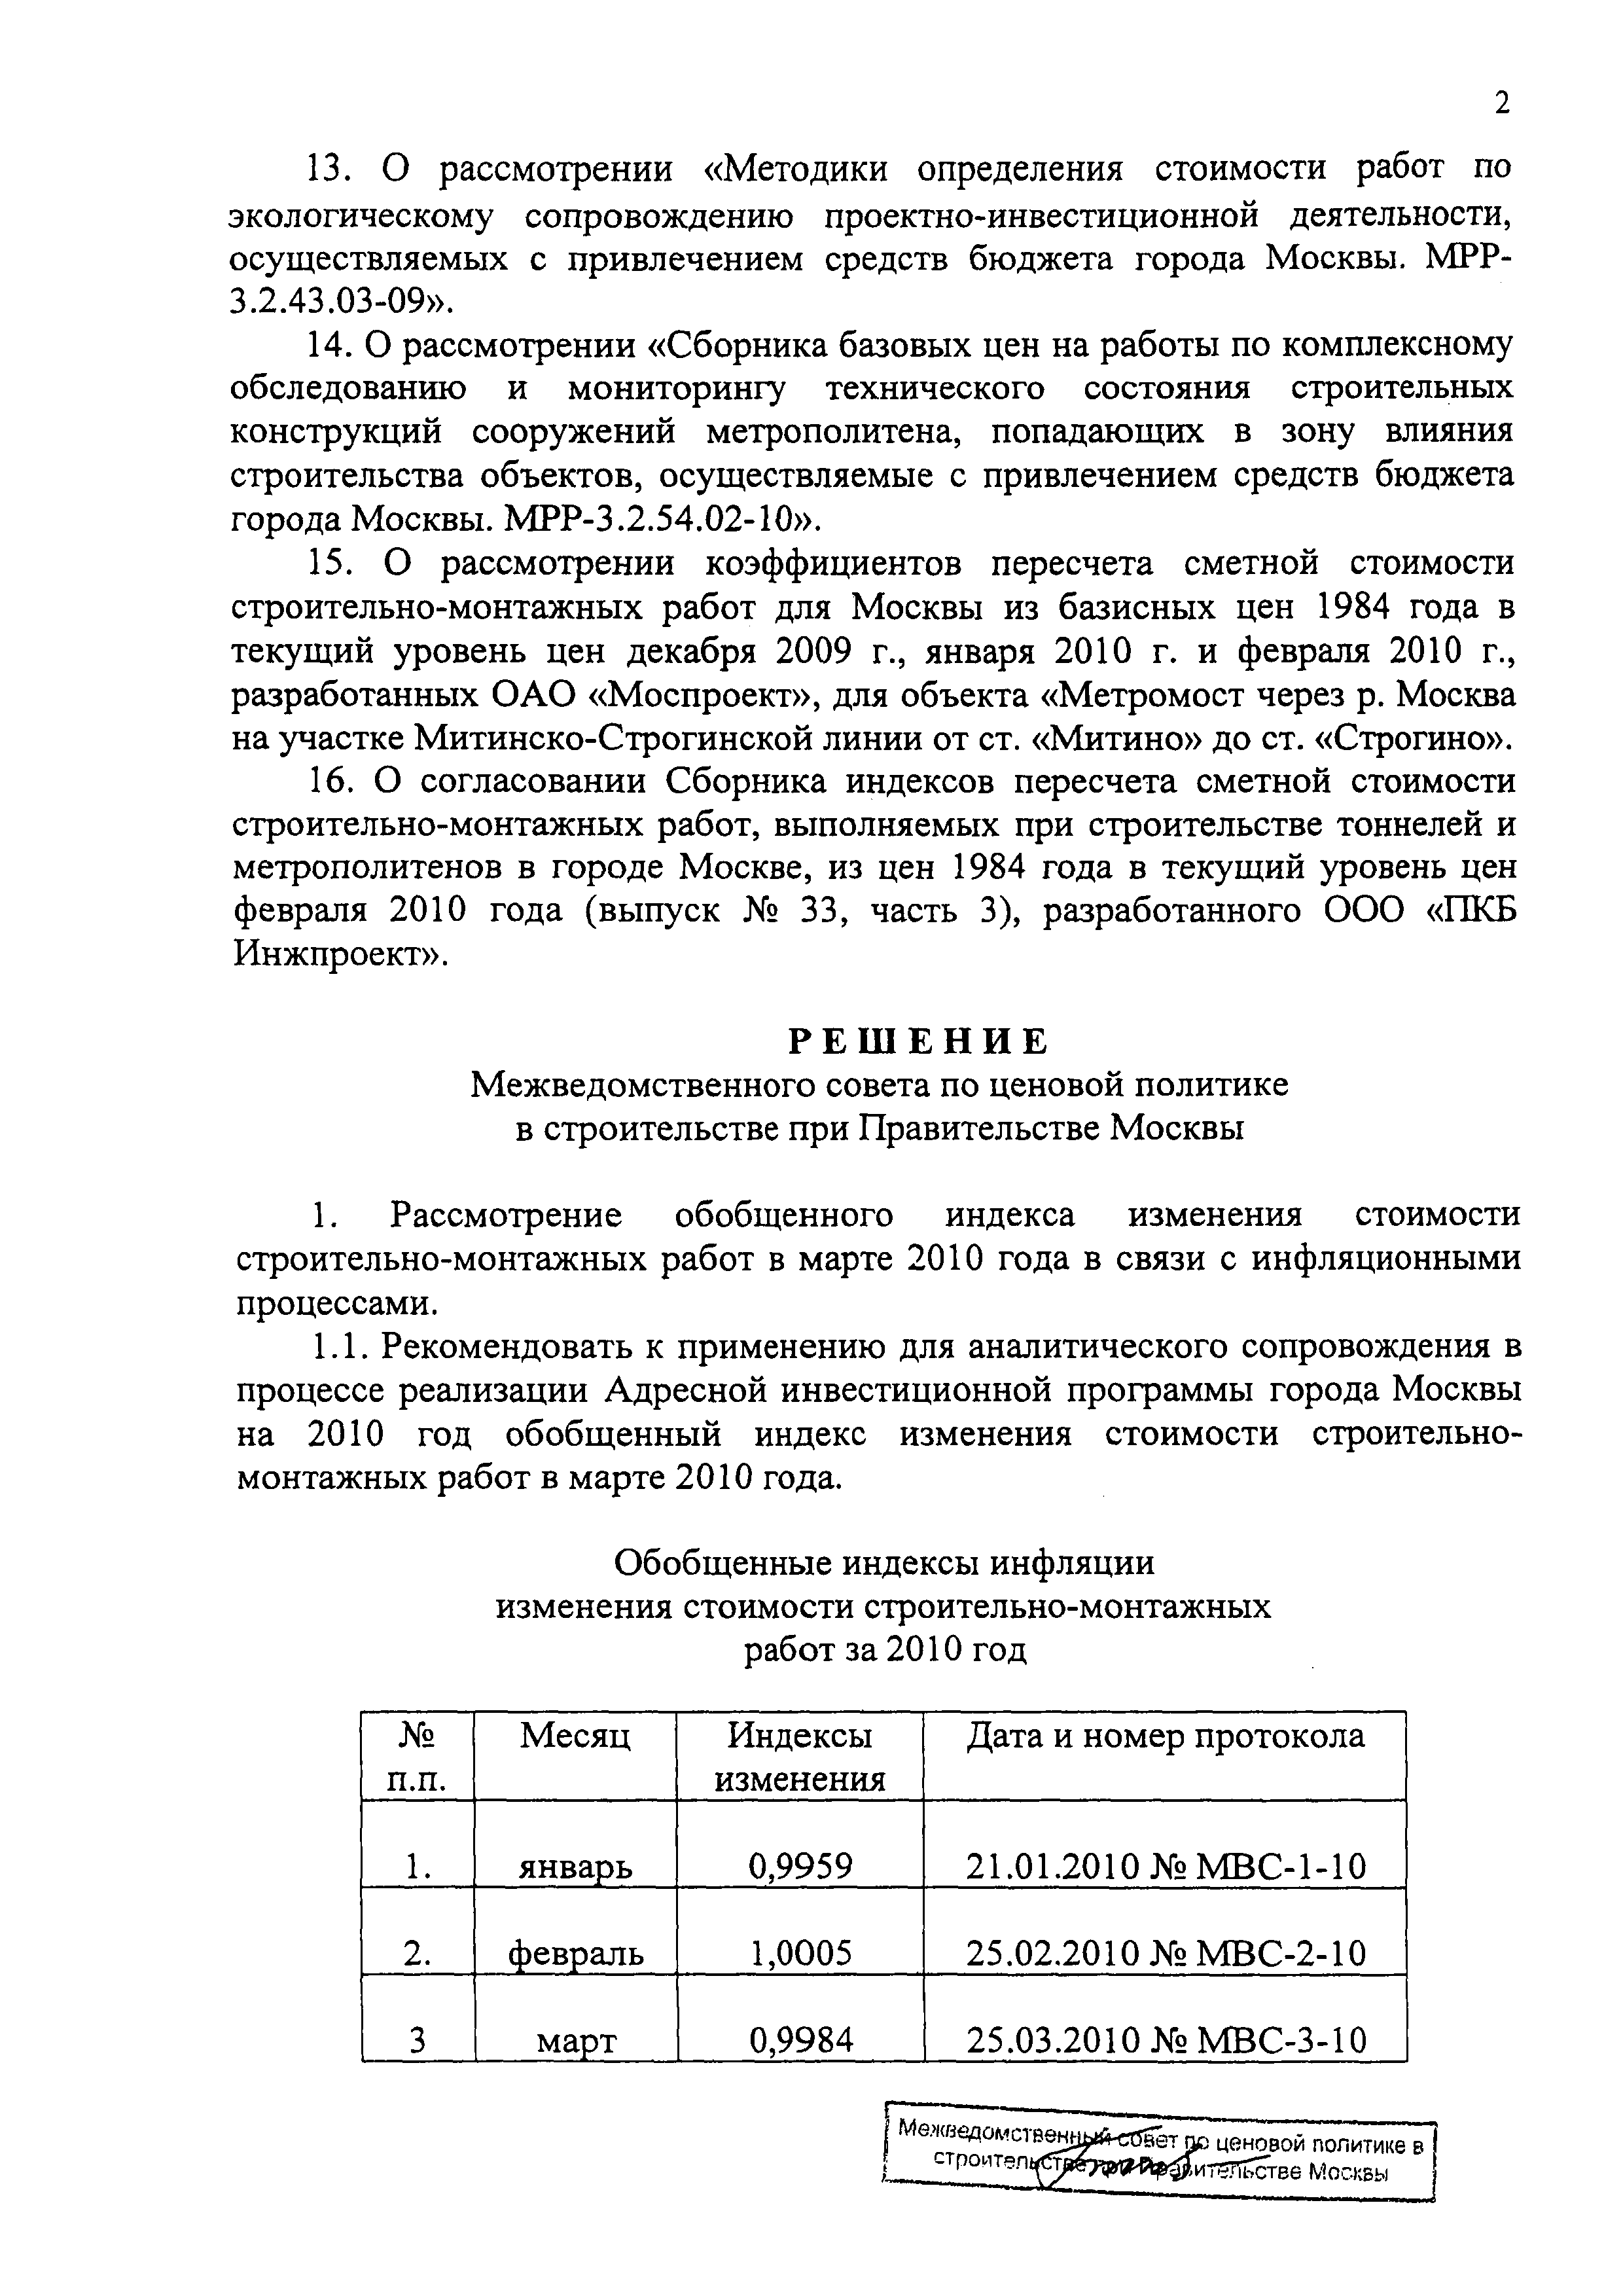 Протокол МВС-3-10